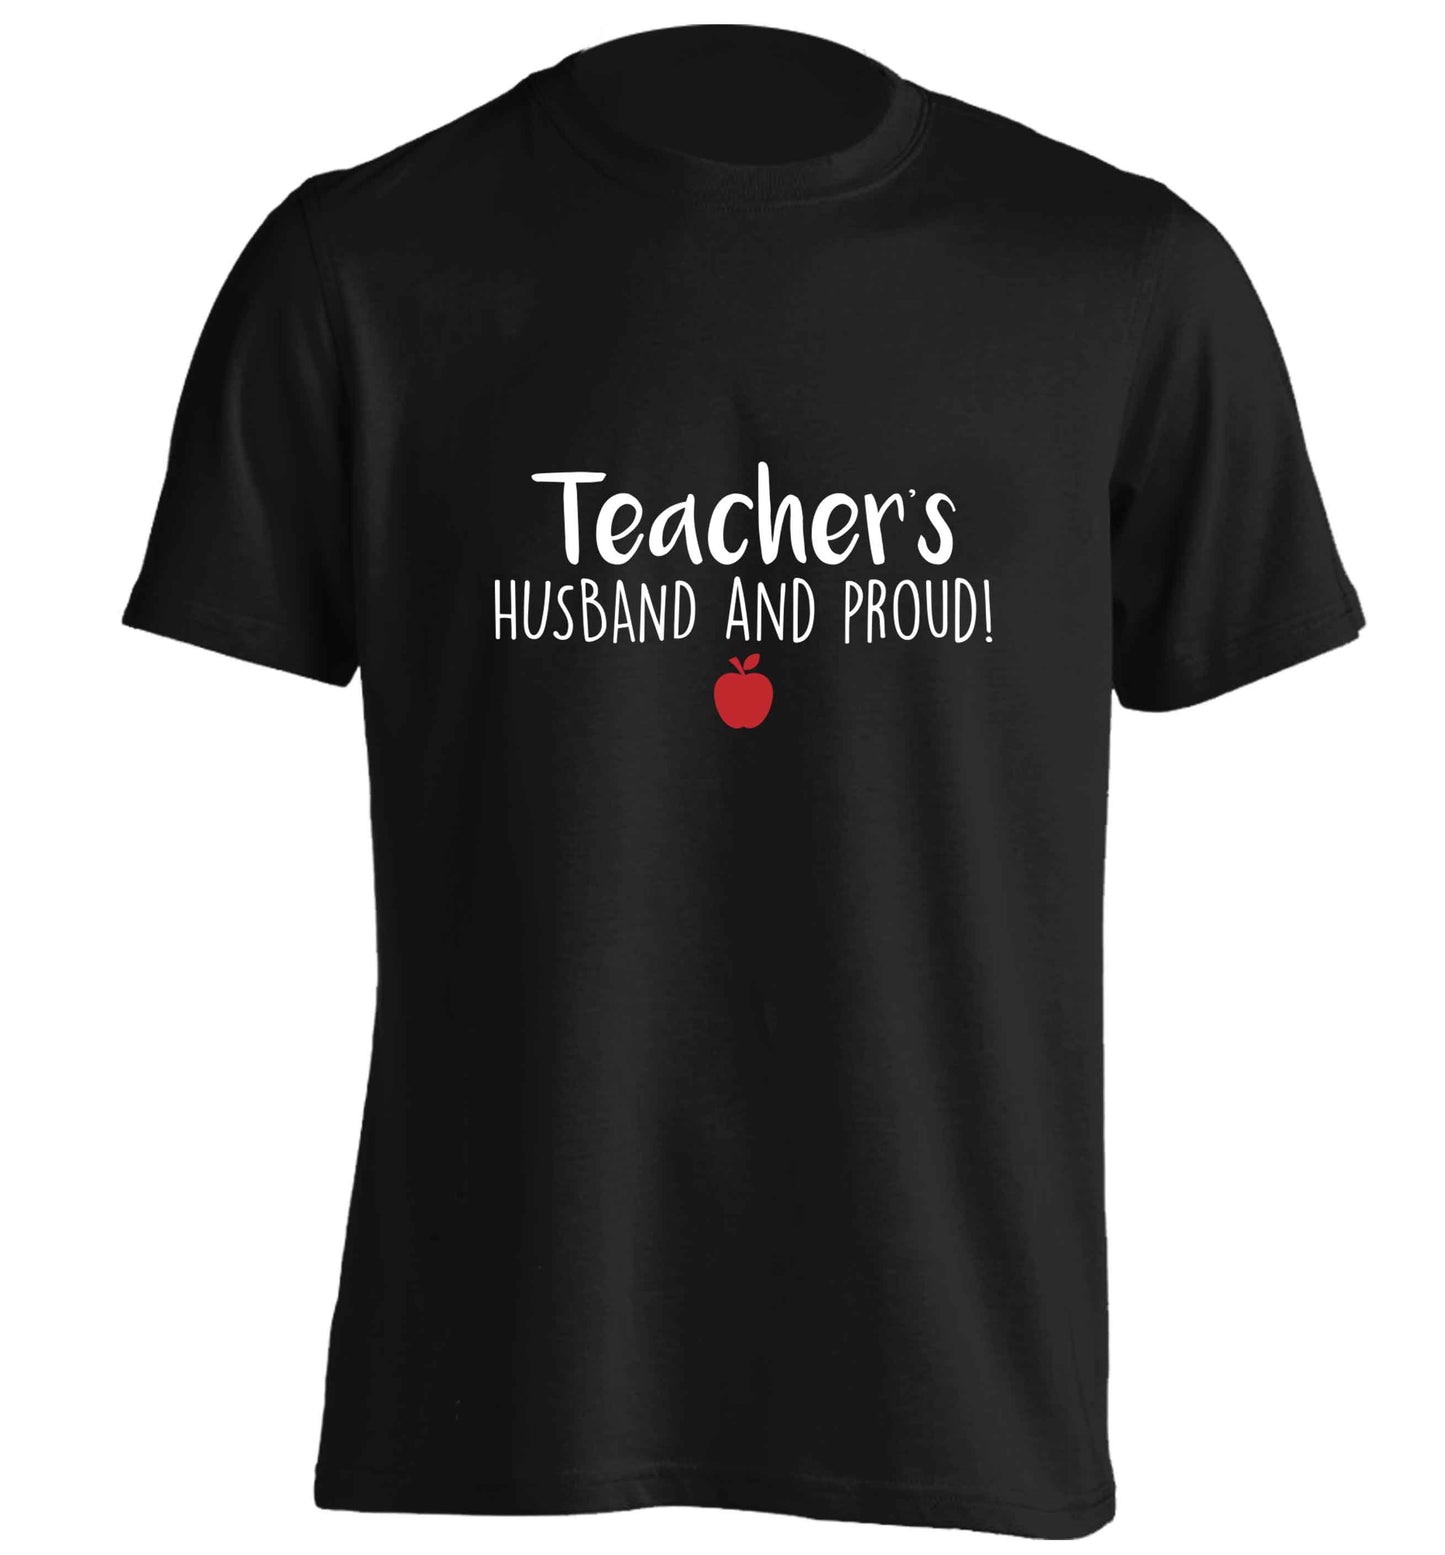 Teachers husband and proud adults unisex black Tshirt 2XL